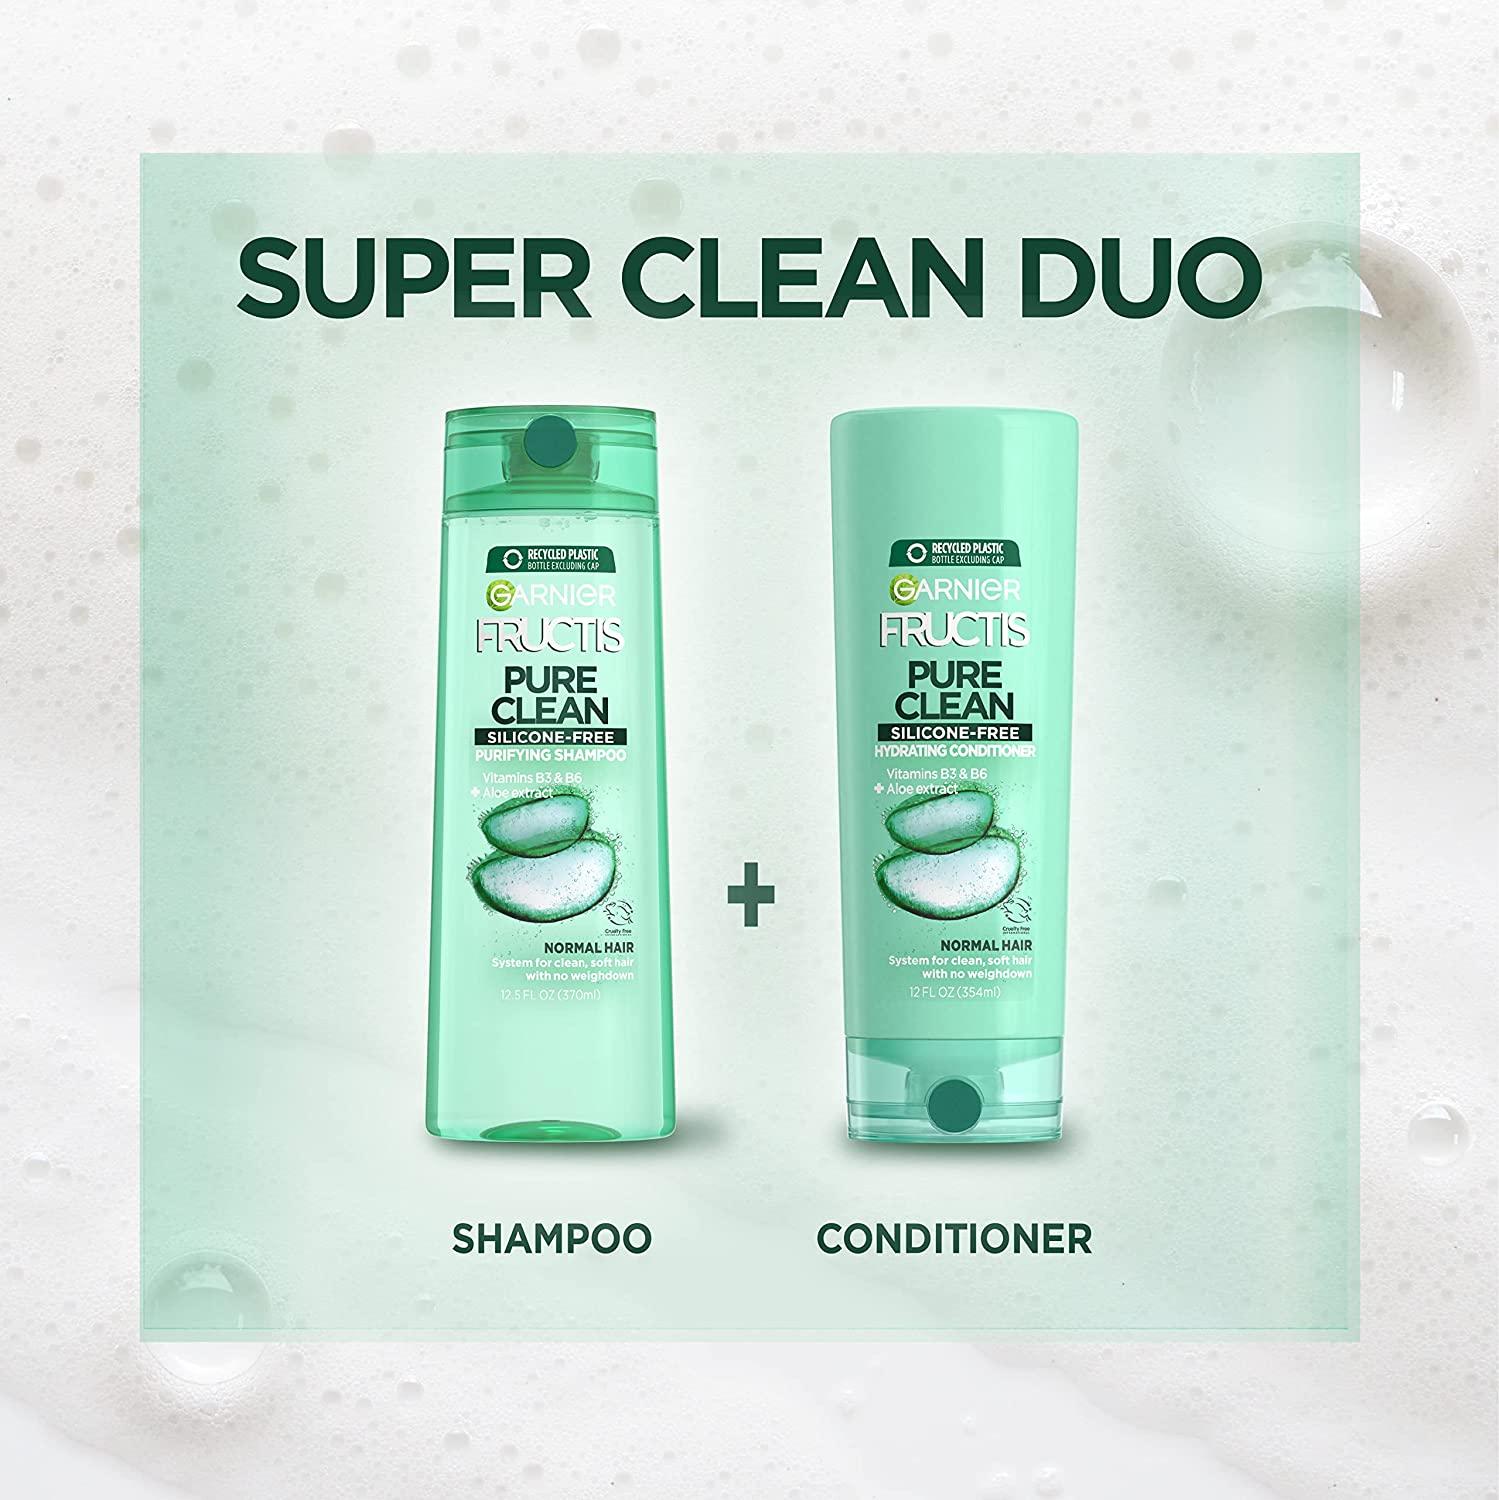 Garnier Fructis Pure Clean Fortifying Shampoo with Aloe 12.5 fl oz (370 ml)